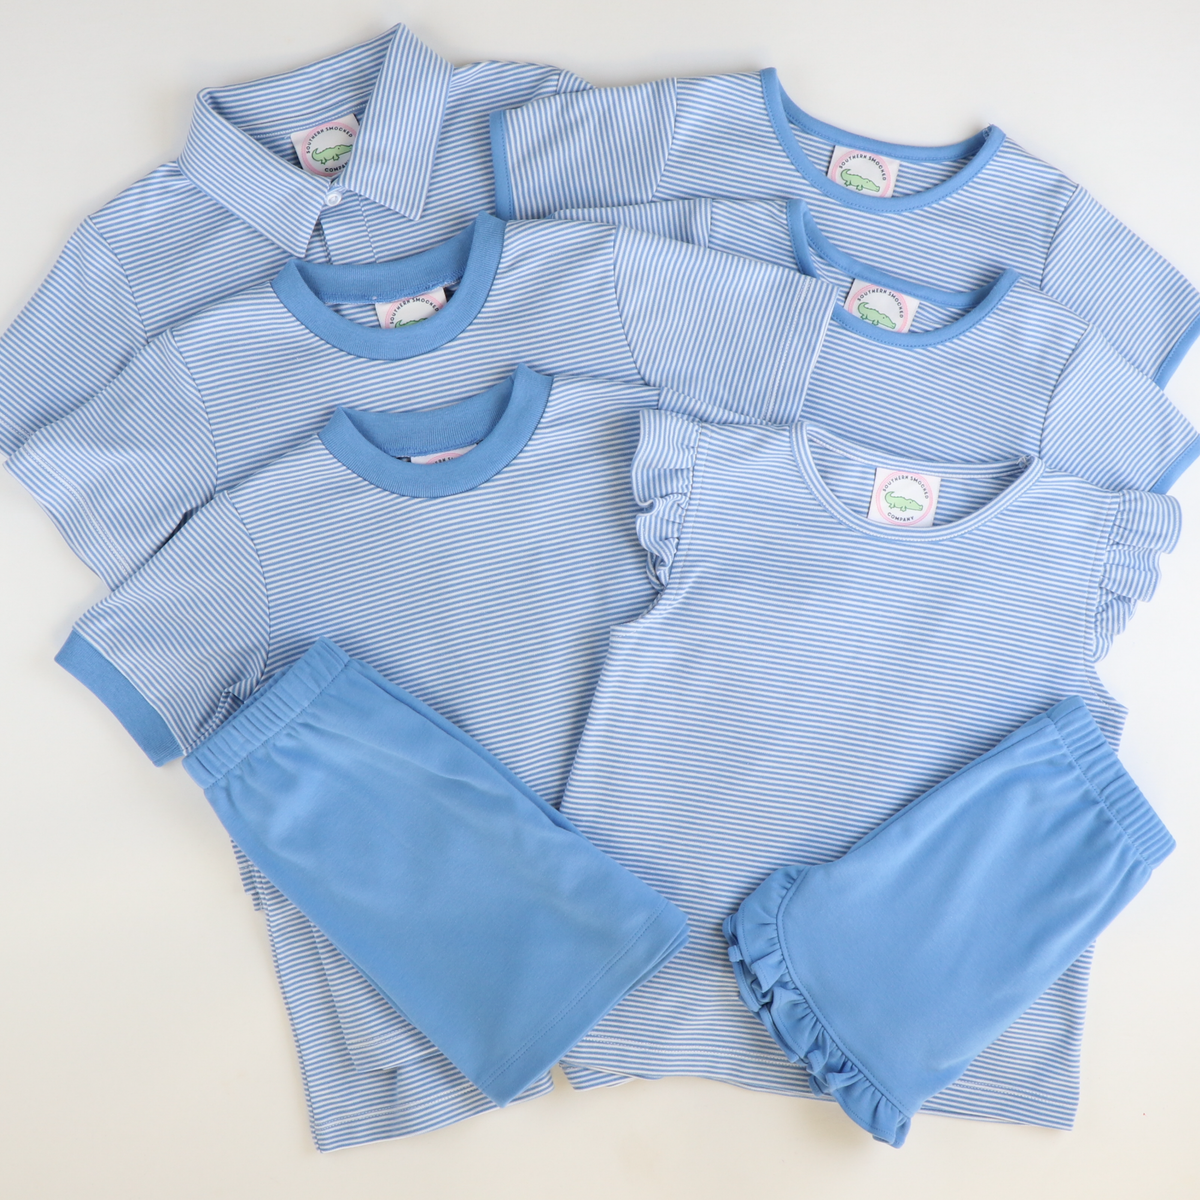 Out & About Boy Shirt - Party Blue Micro Stripe Knit